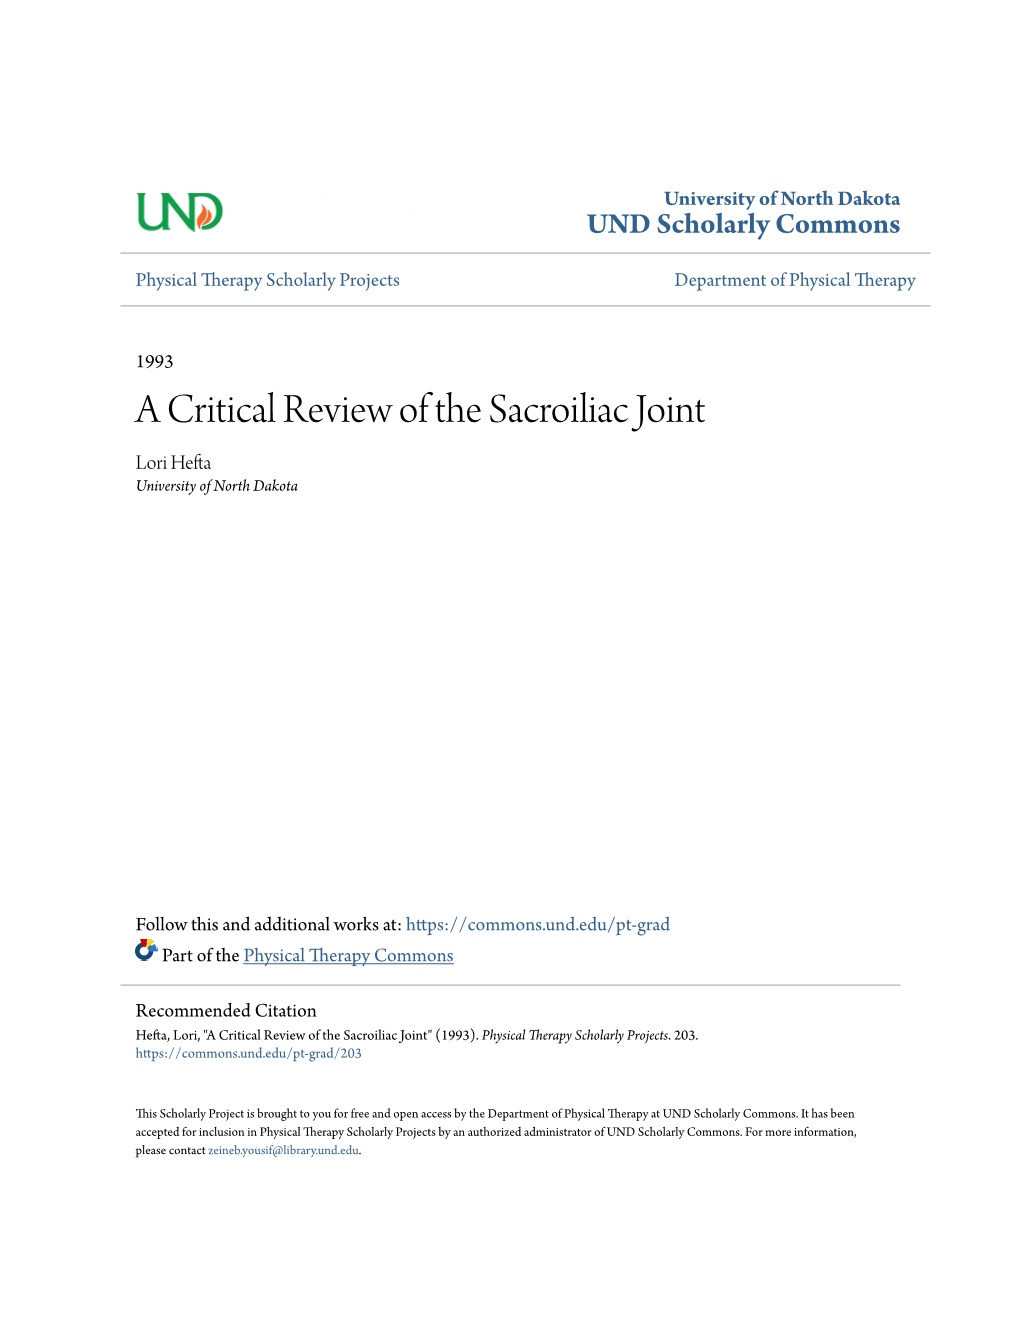 A Critical Review of the Sacroiliac Joint Lori Hefta University of North Dakota